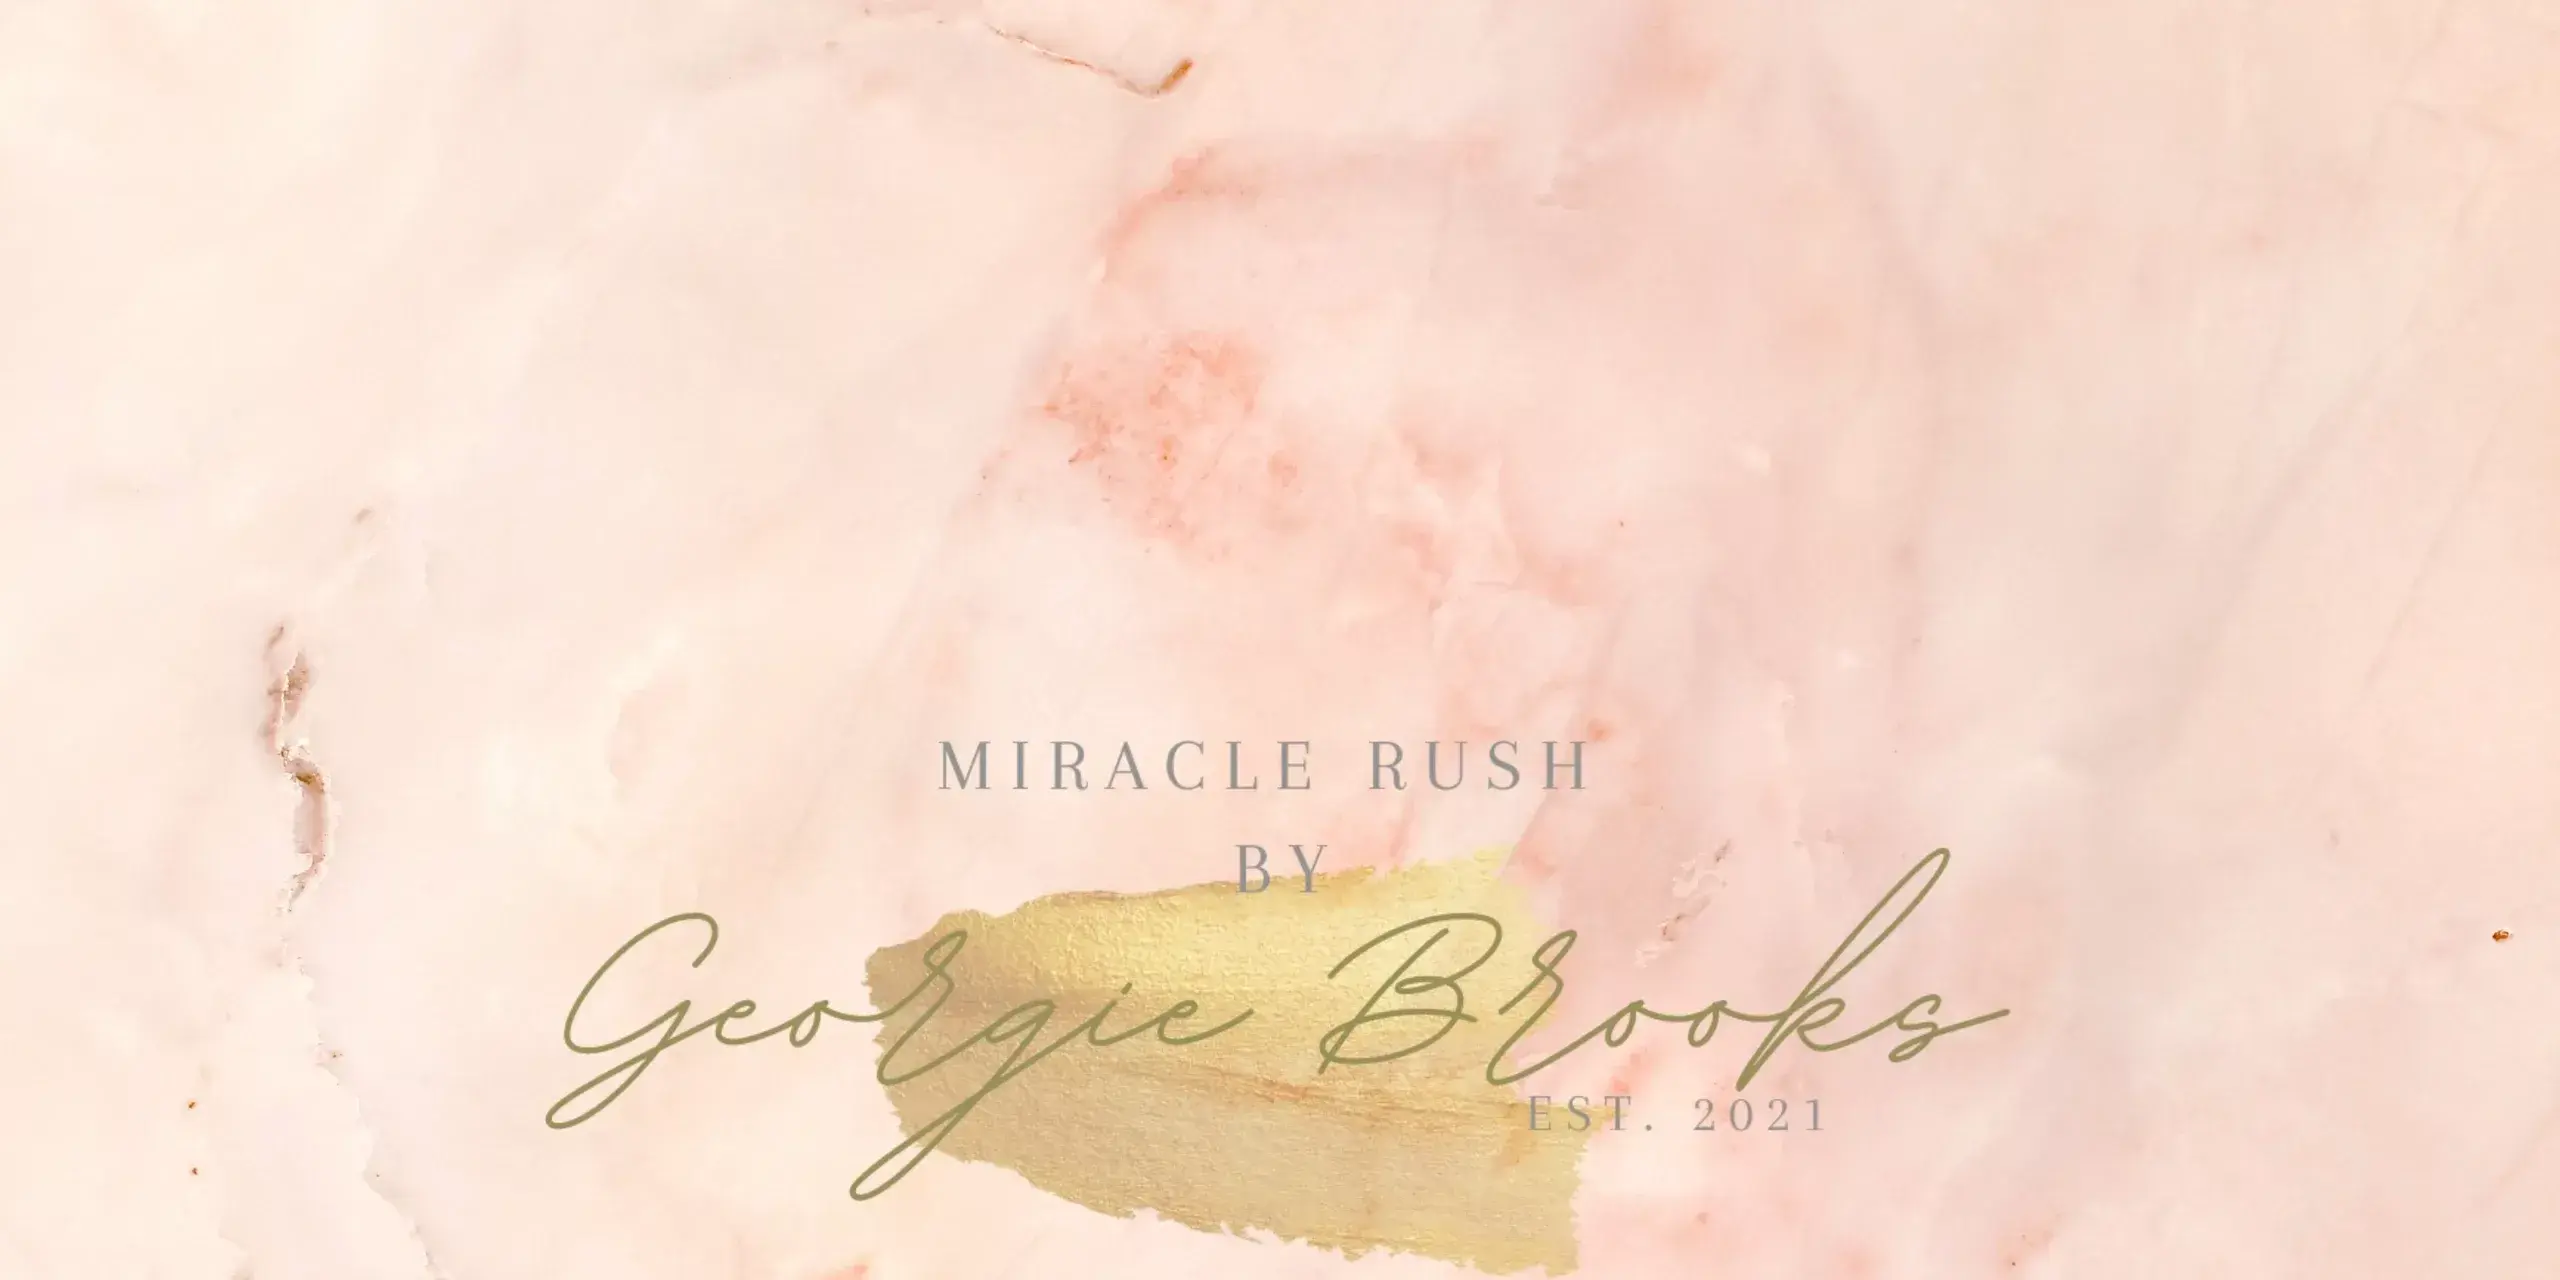 Miracle Rush by Georgie Brooks